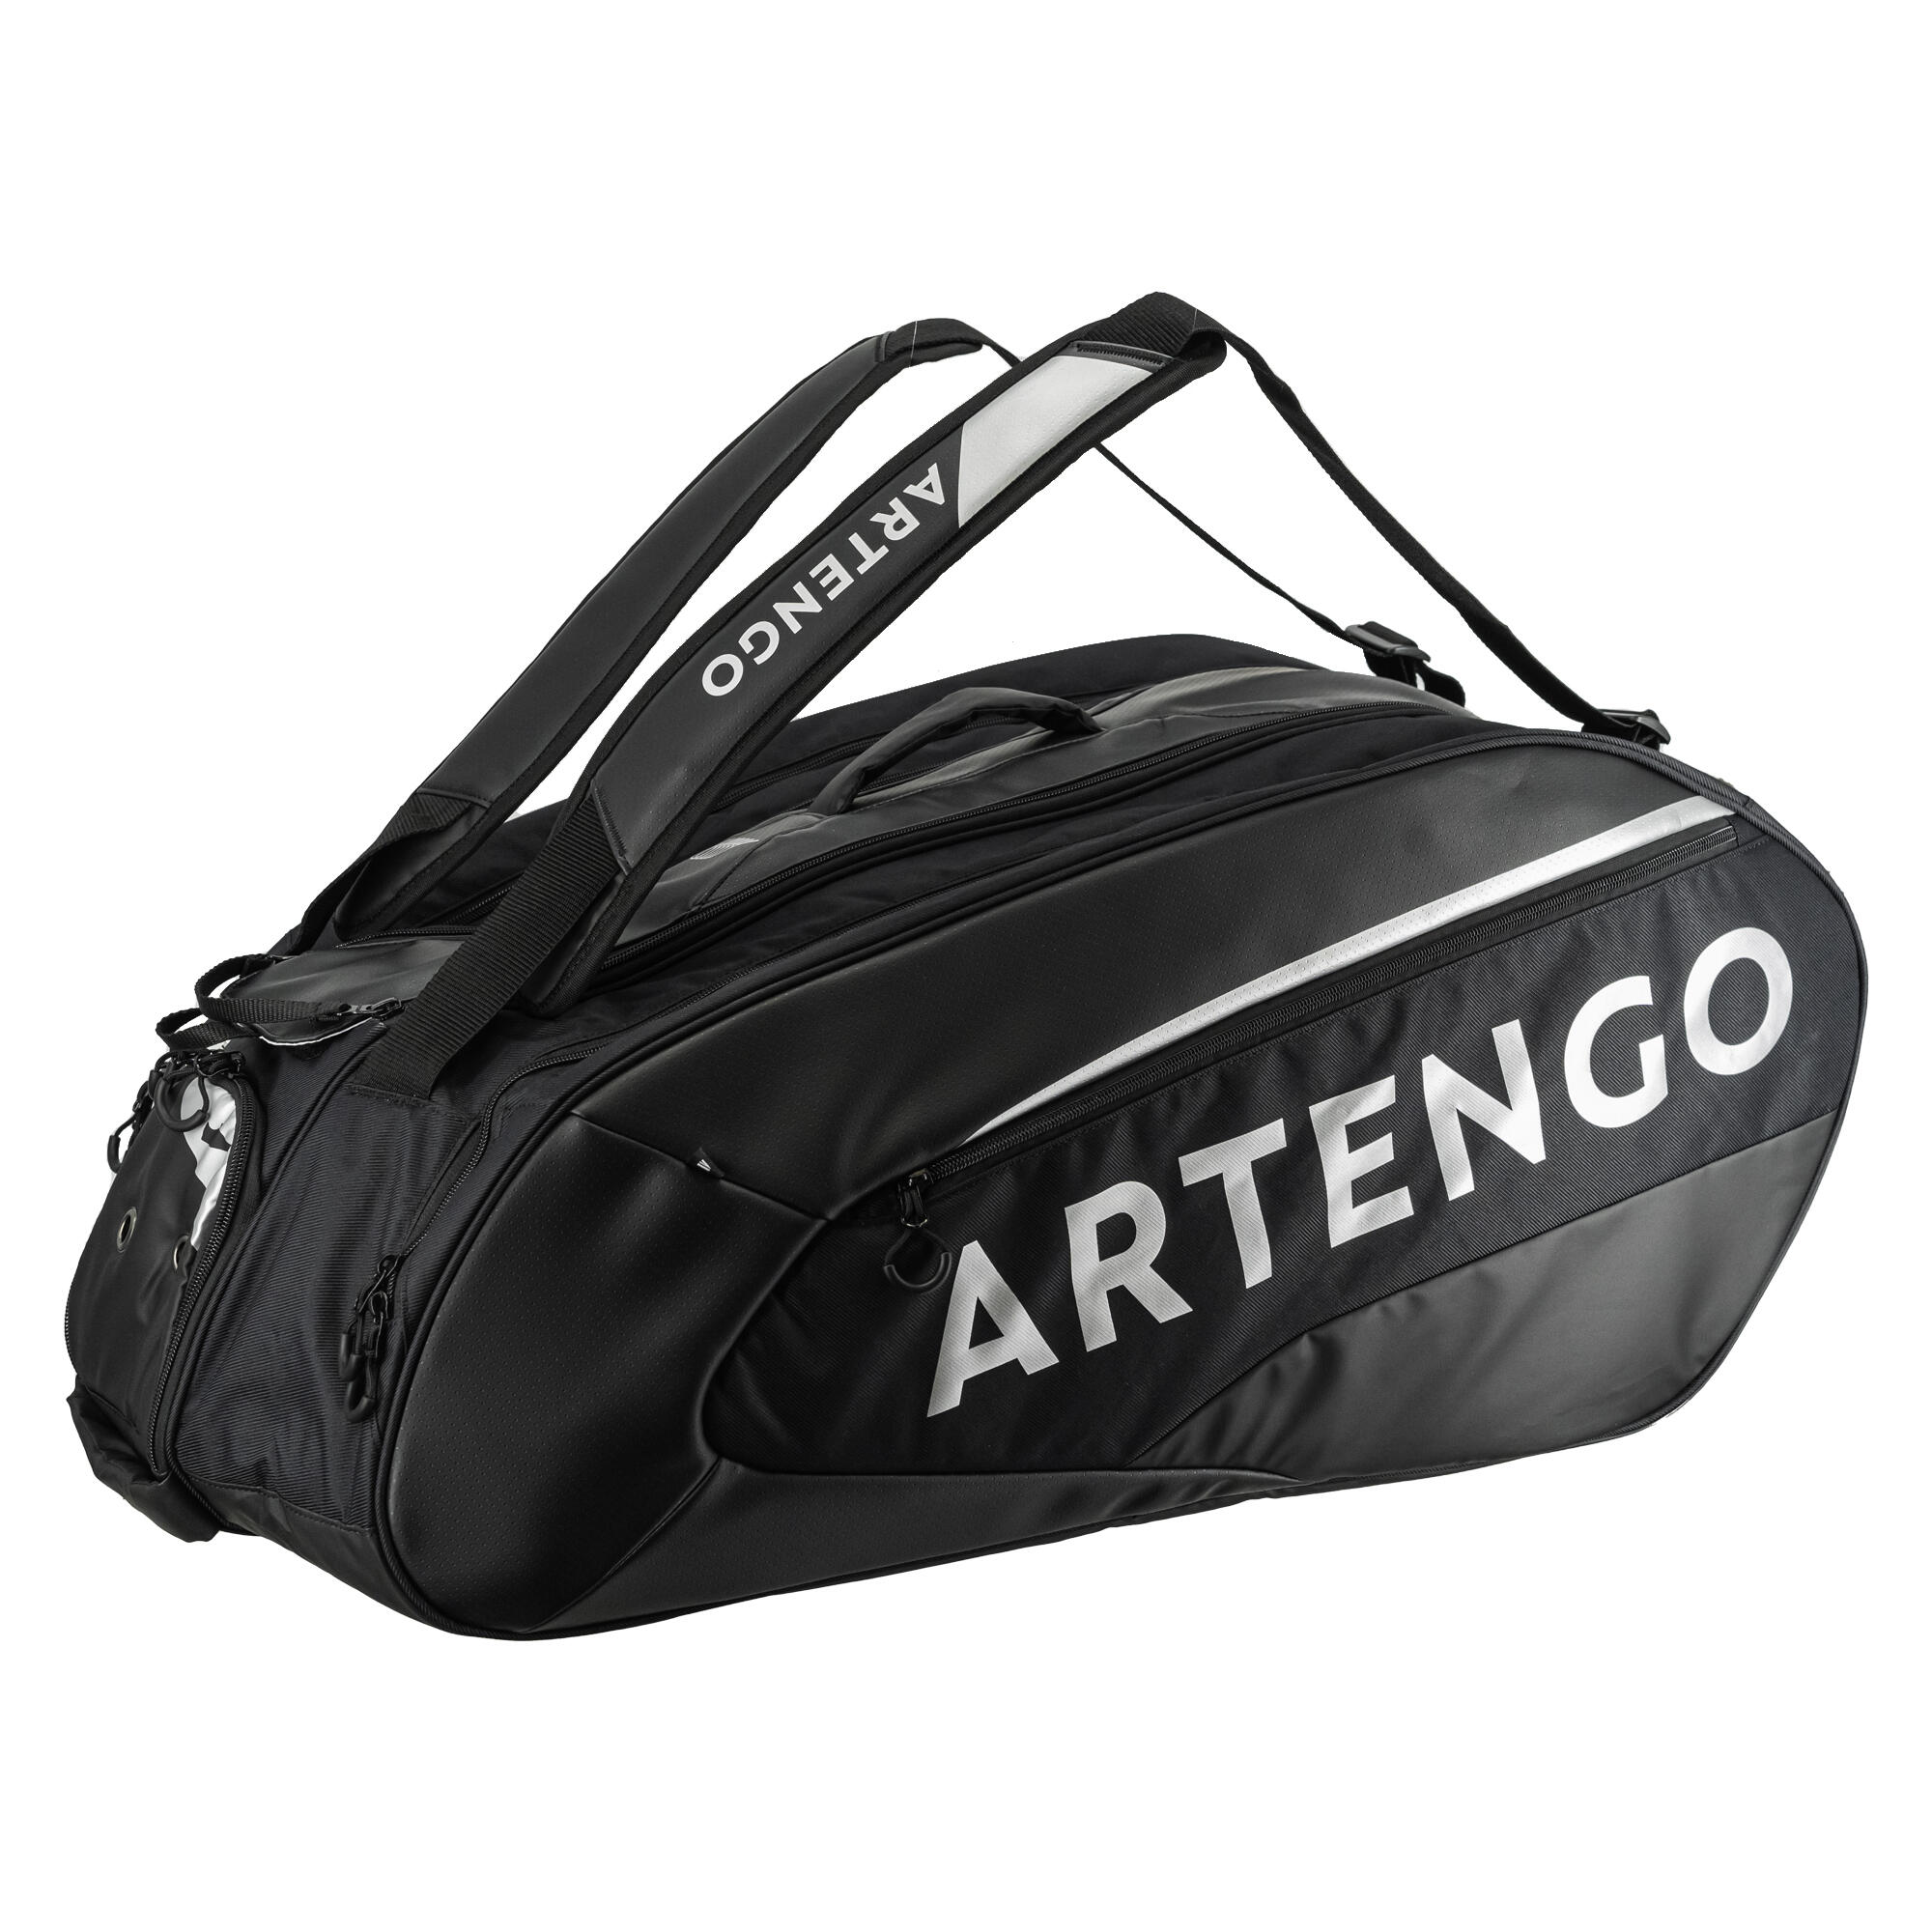 Share more than 60 tennis kit bag online